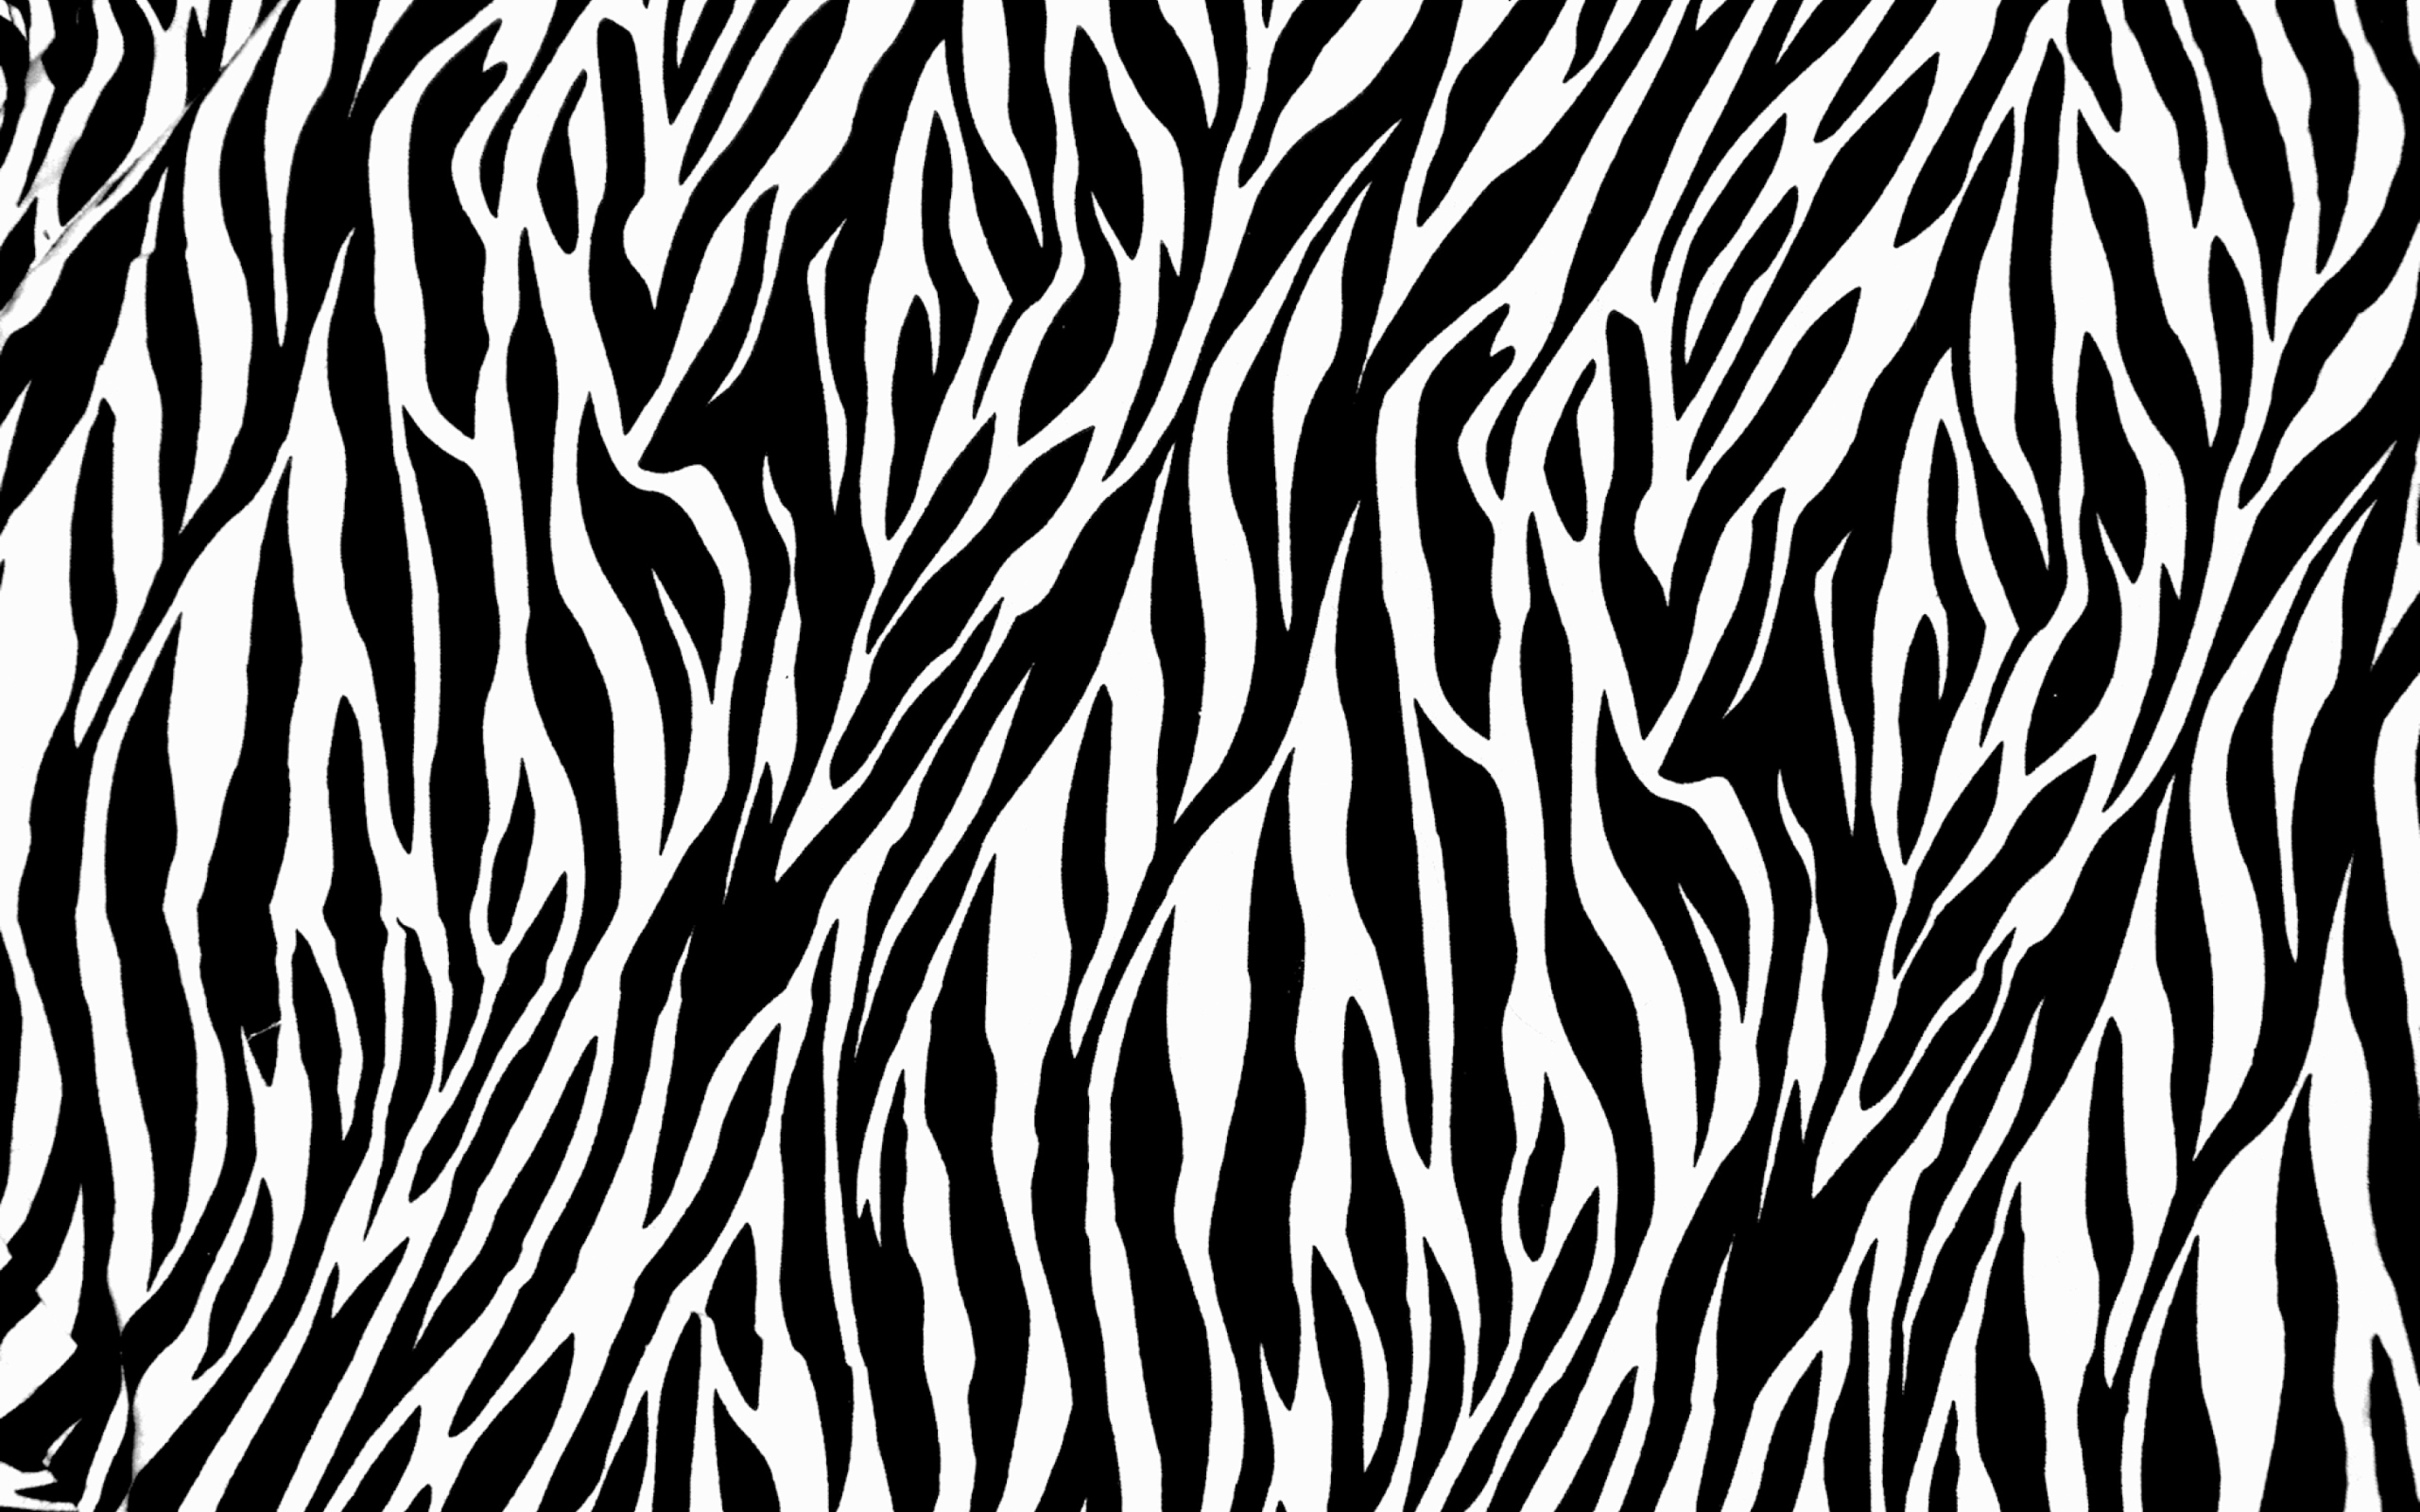 Zebra Print Wallpaper HD For Desktop.